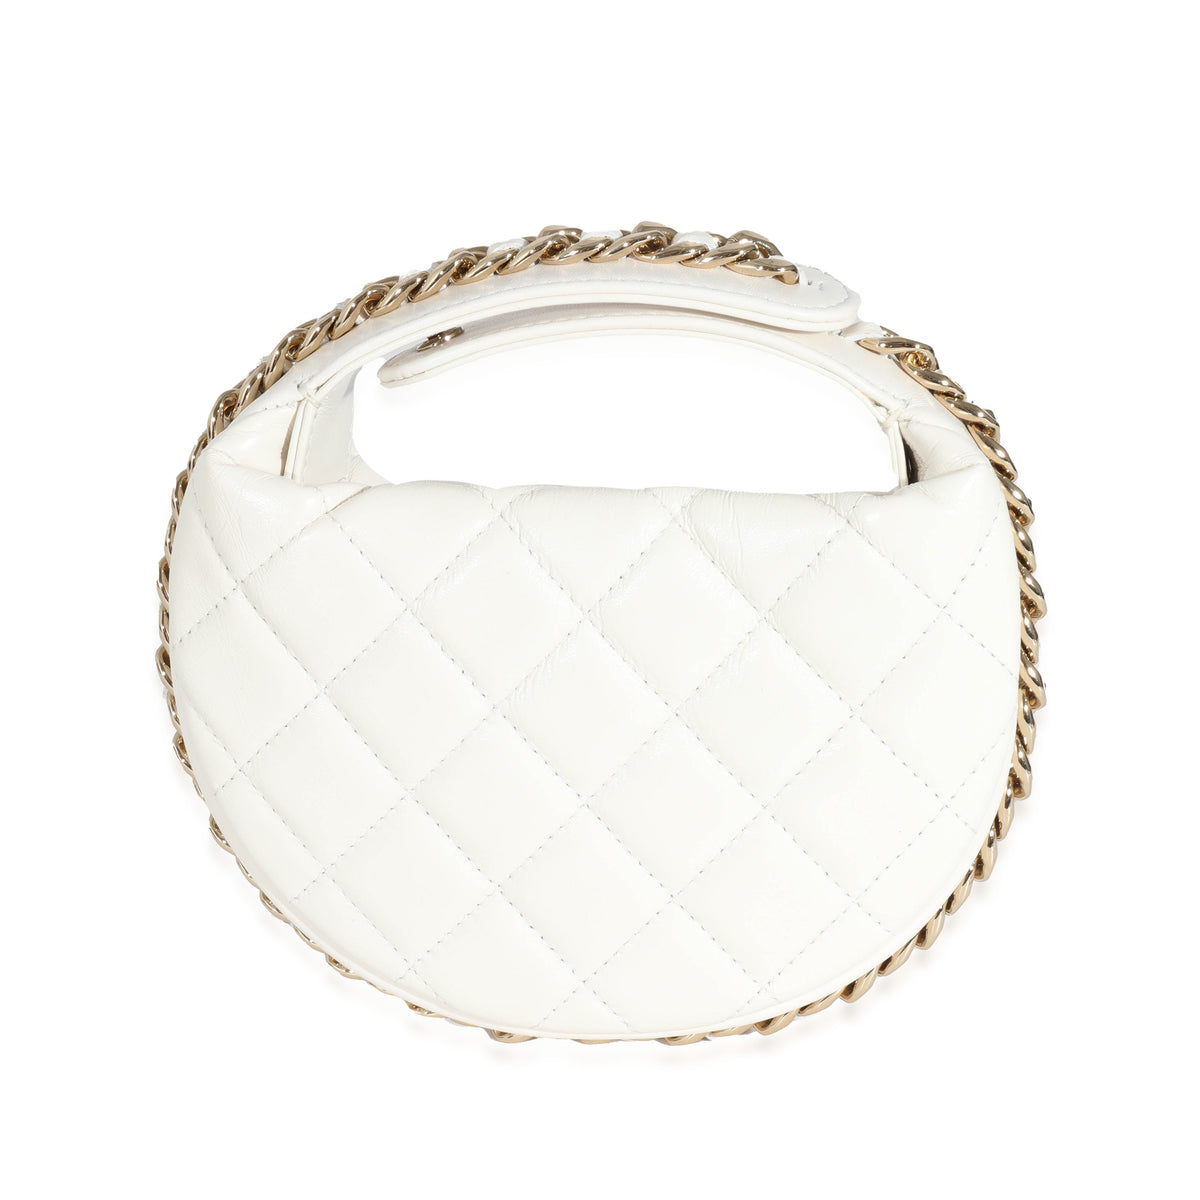 Rare Chanel Round Black & White Lambskin Handbag Circle Shoulder Bag or  Clutch